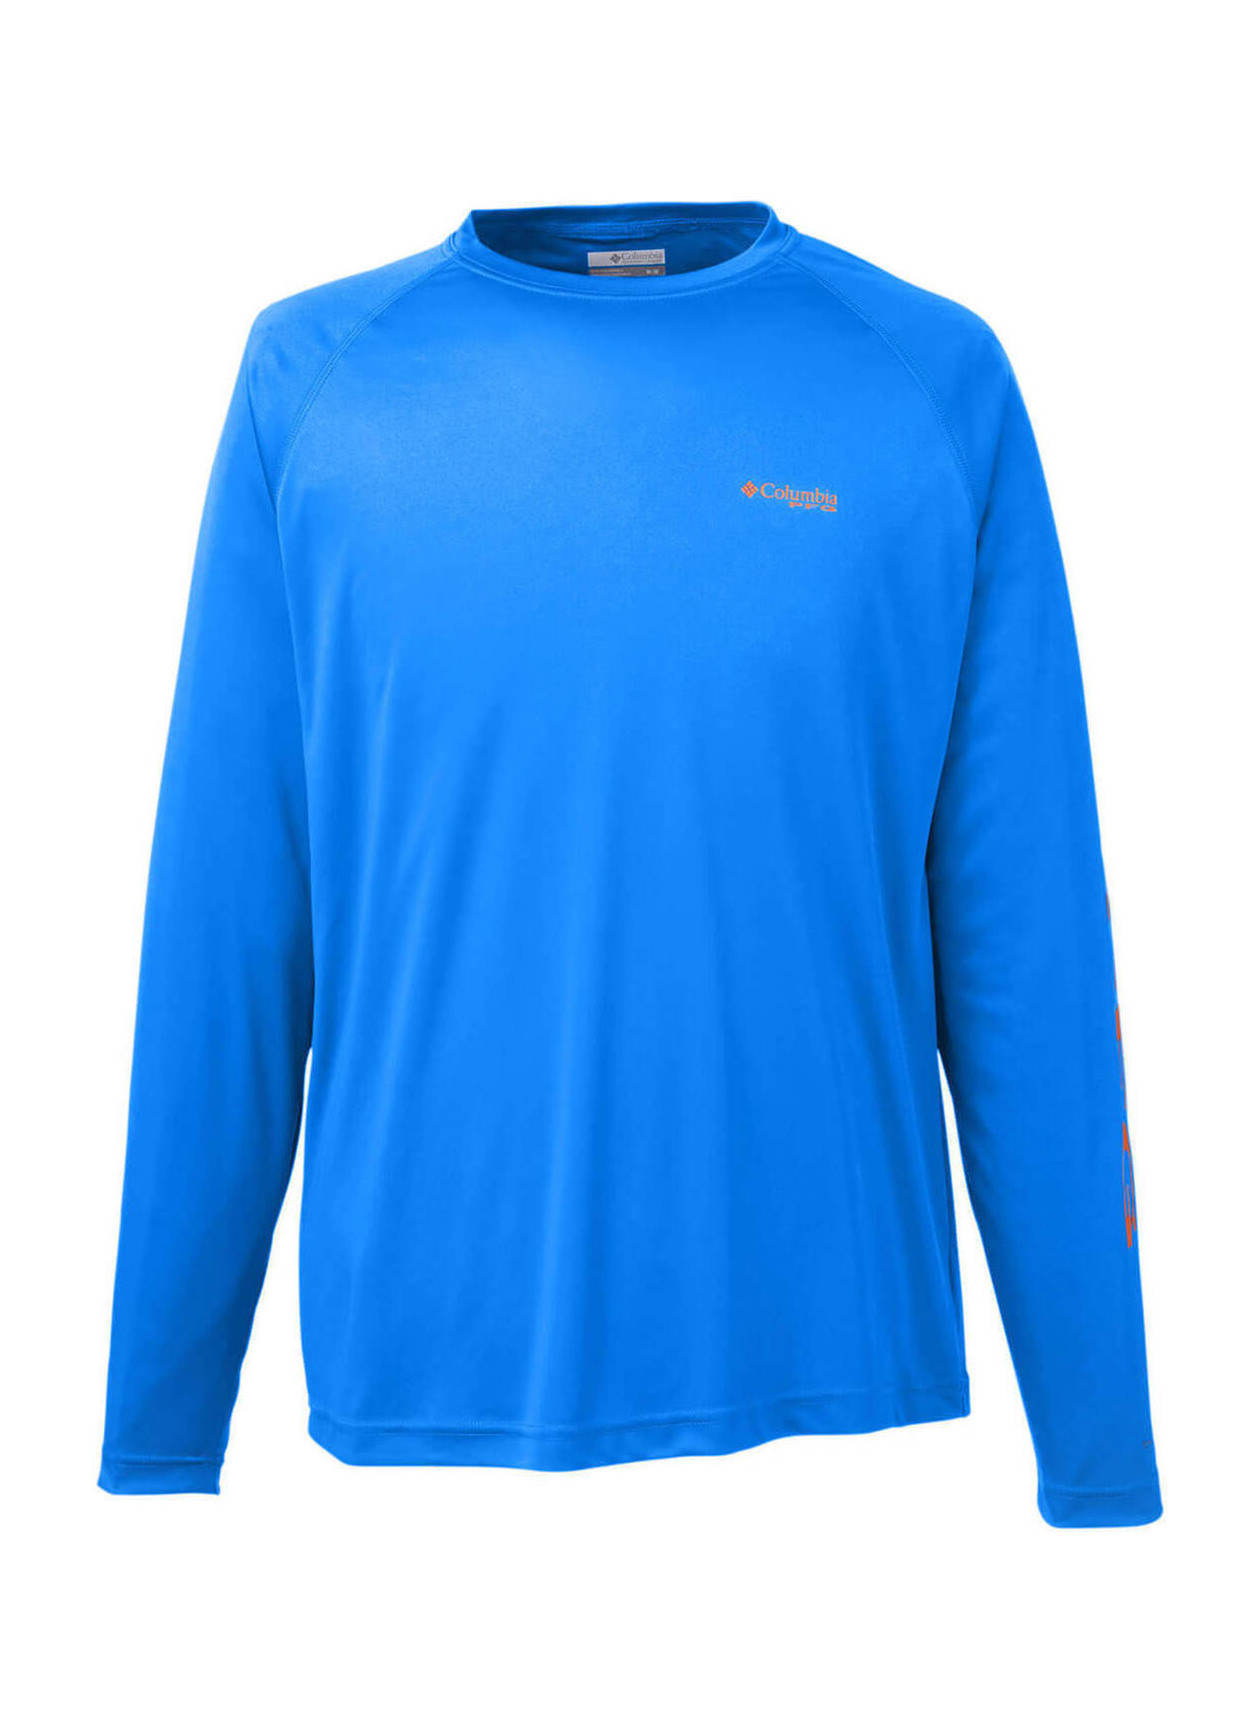 Columbia Men's Vivid Blue / Jupiter Terminal Tackle Long-Sleeve T-Shirt